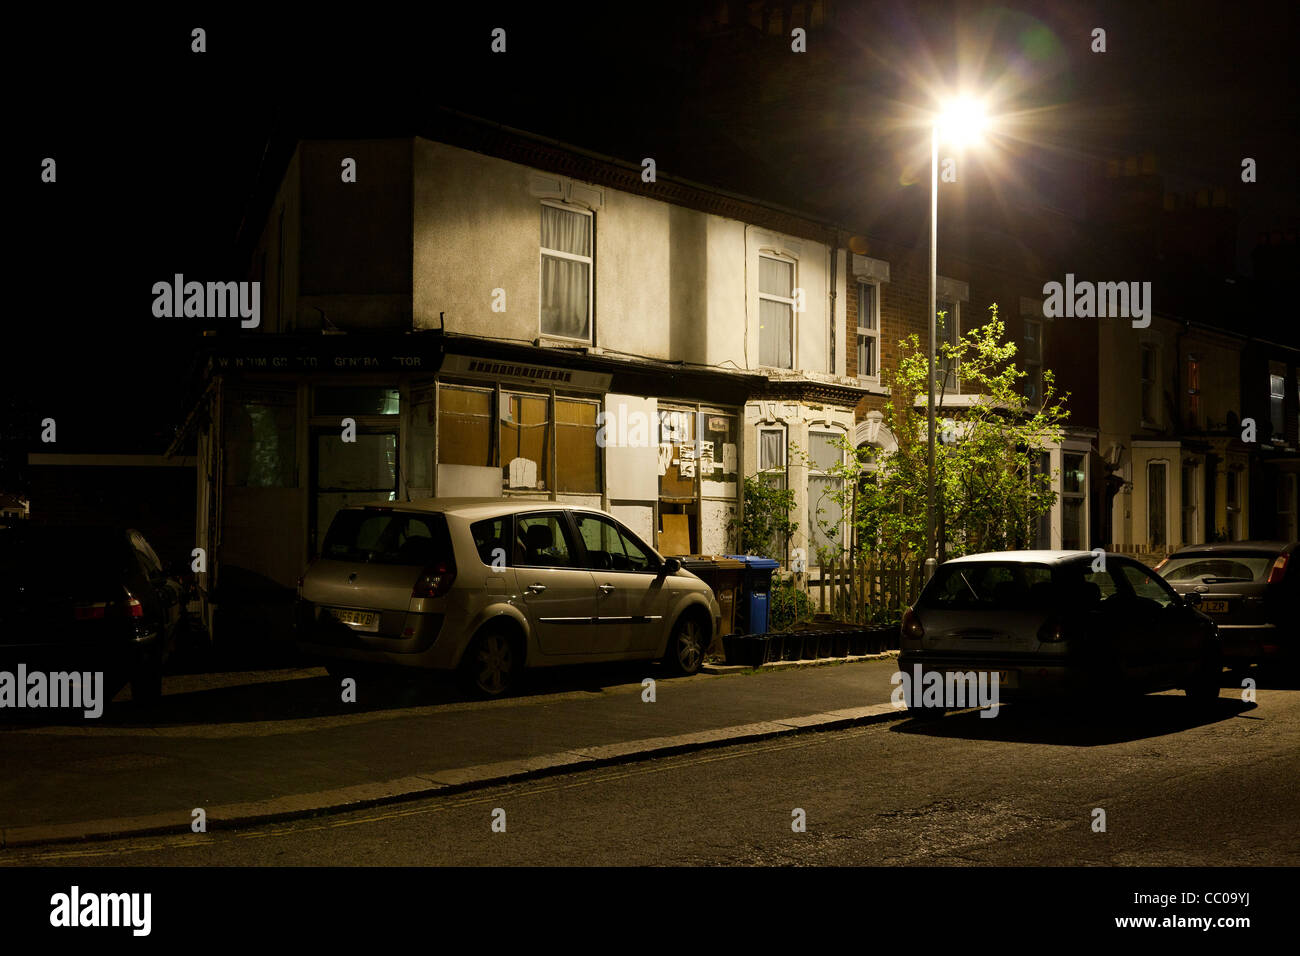 street at night in UK Stock Photo